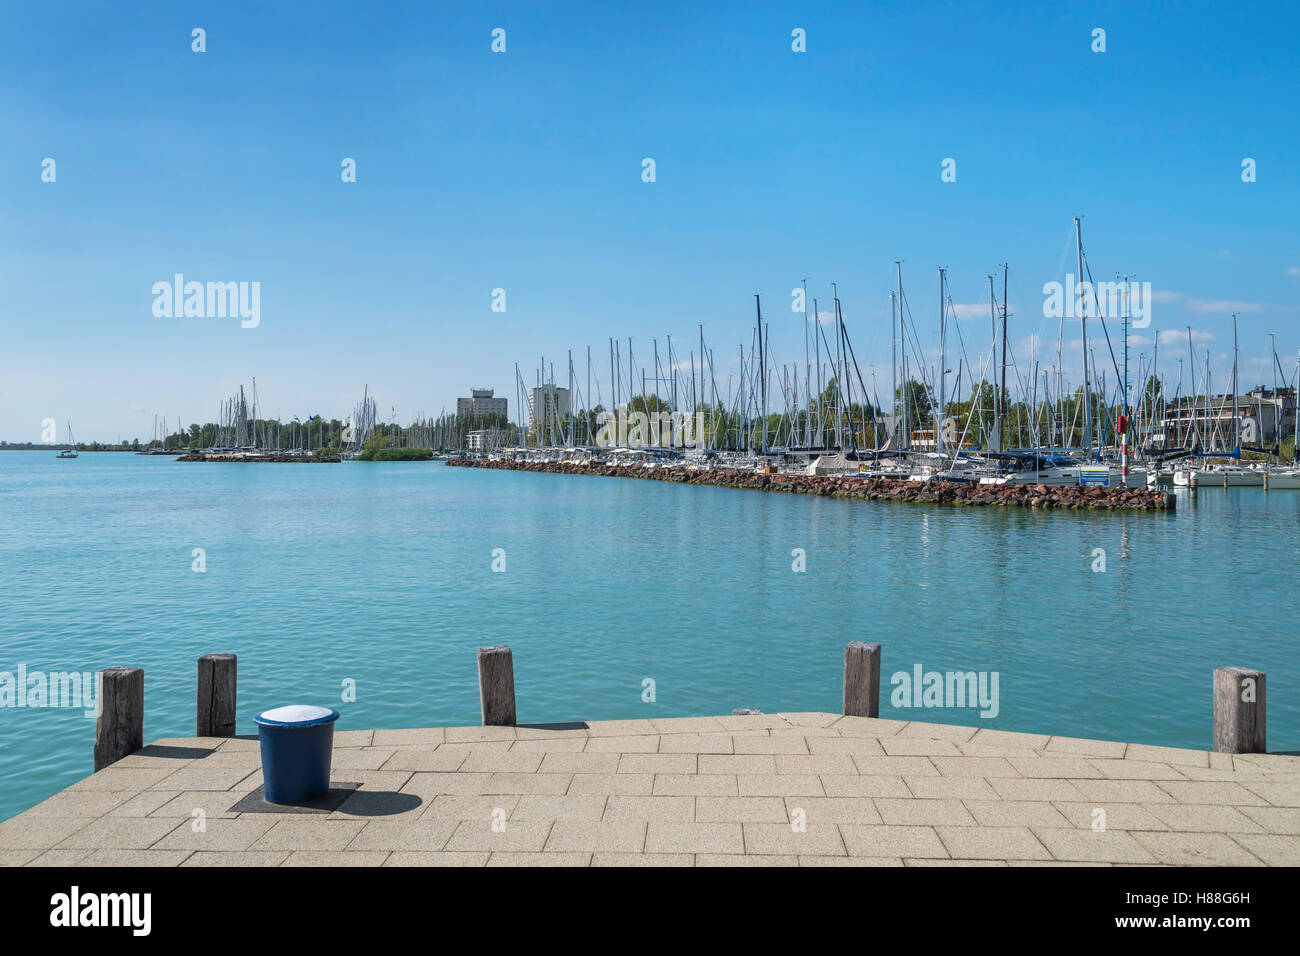 Port of Balatonfured and Lake Balaton with boats in Hungary Stock Photo